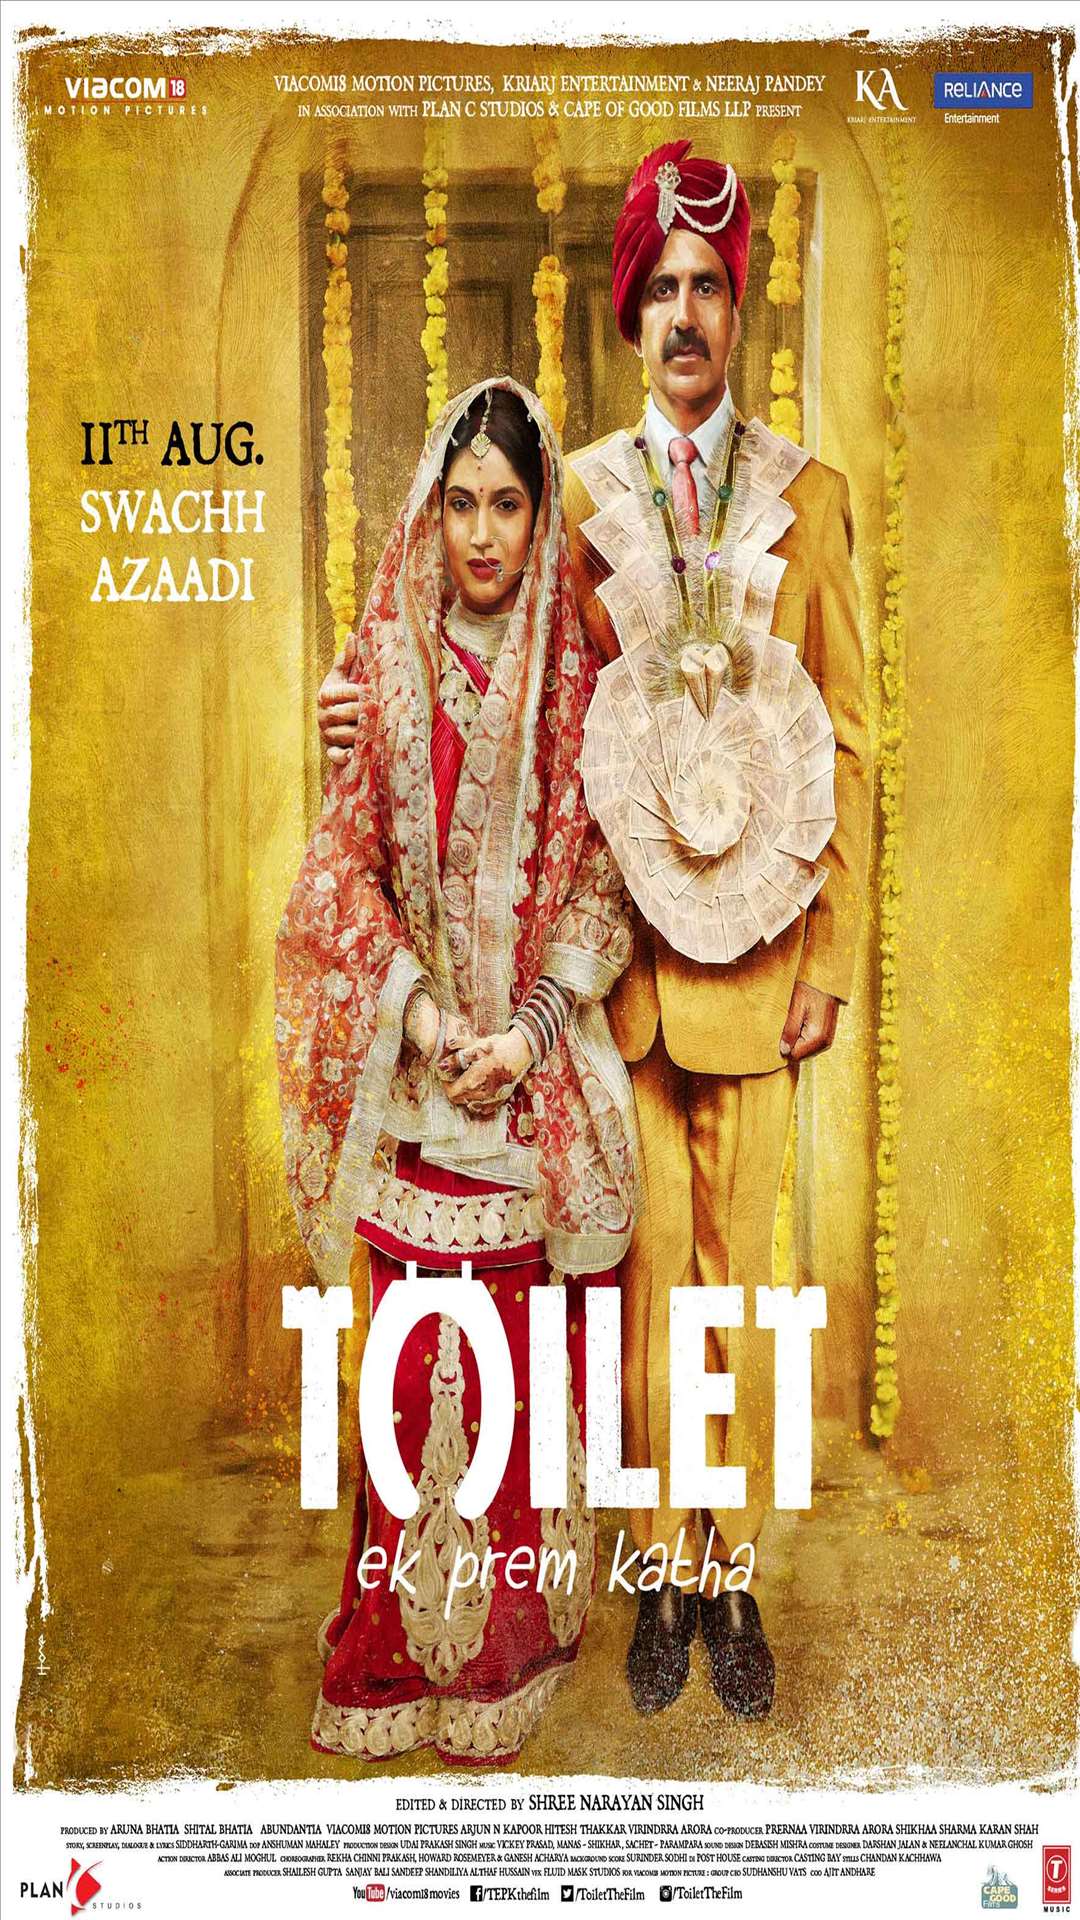 Toilet: Ek Prem Katha is being screened at Cineworld, Ashford